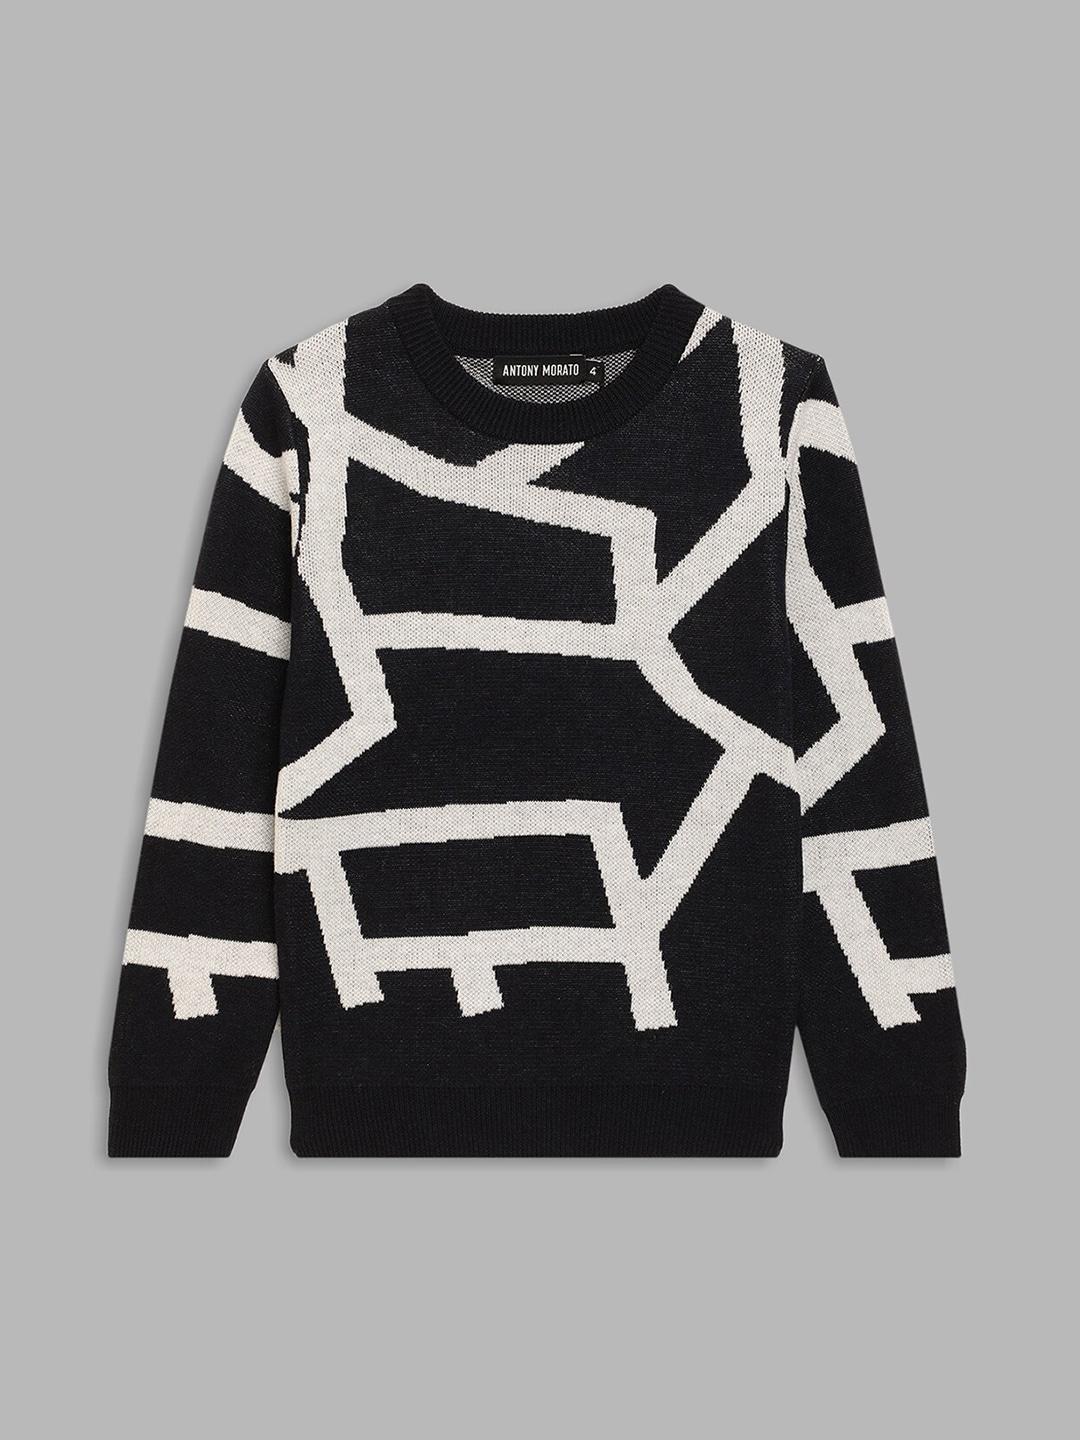 Antony Morato Boys Black & White Sweater